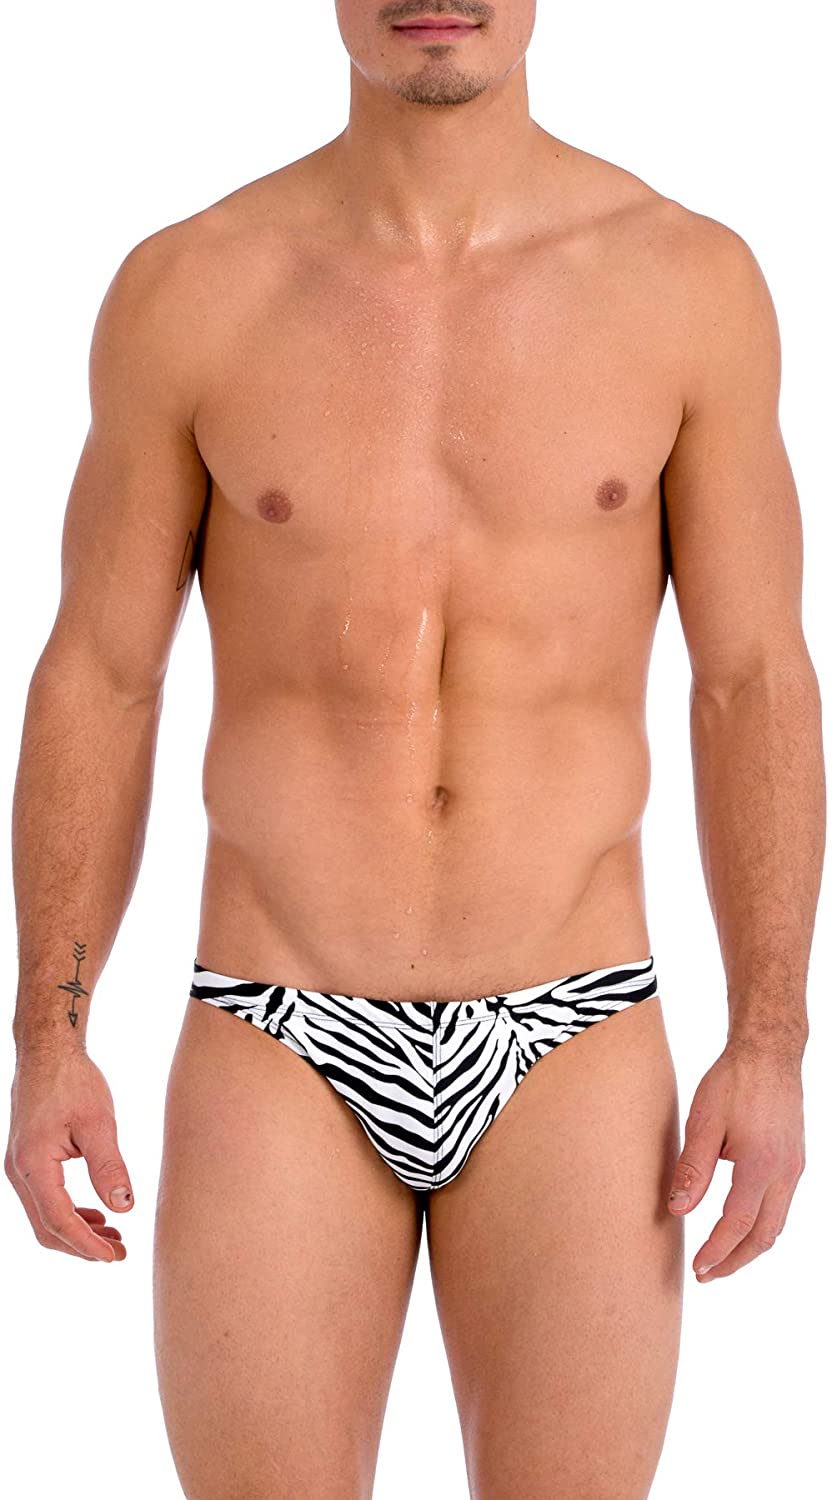 Gary Majdell Sport Mens Solid Contour Pouch Bikini Swimsuit